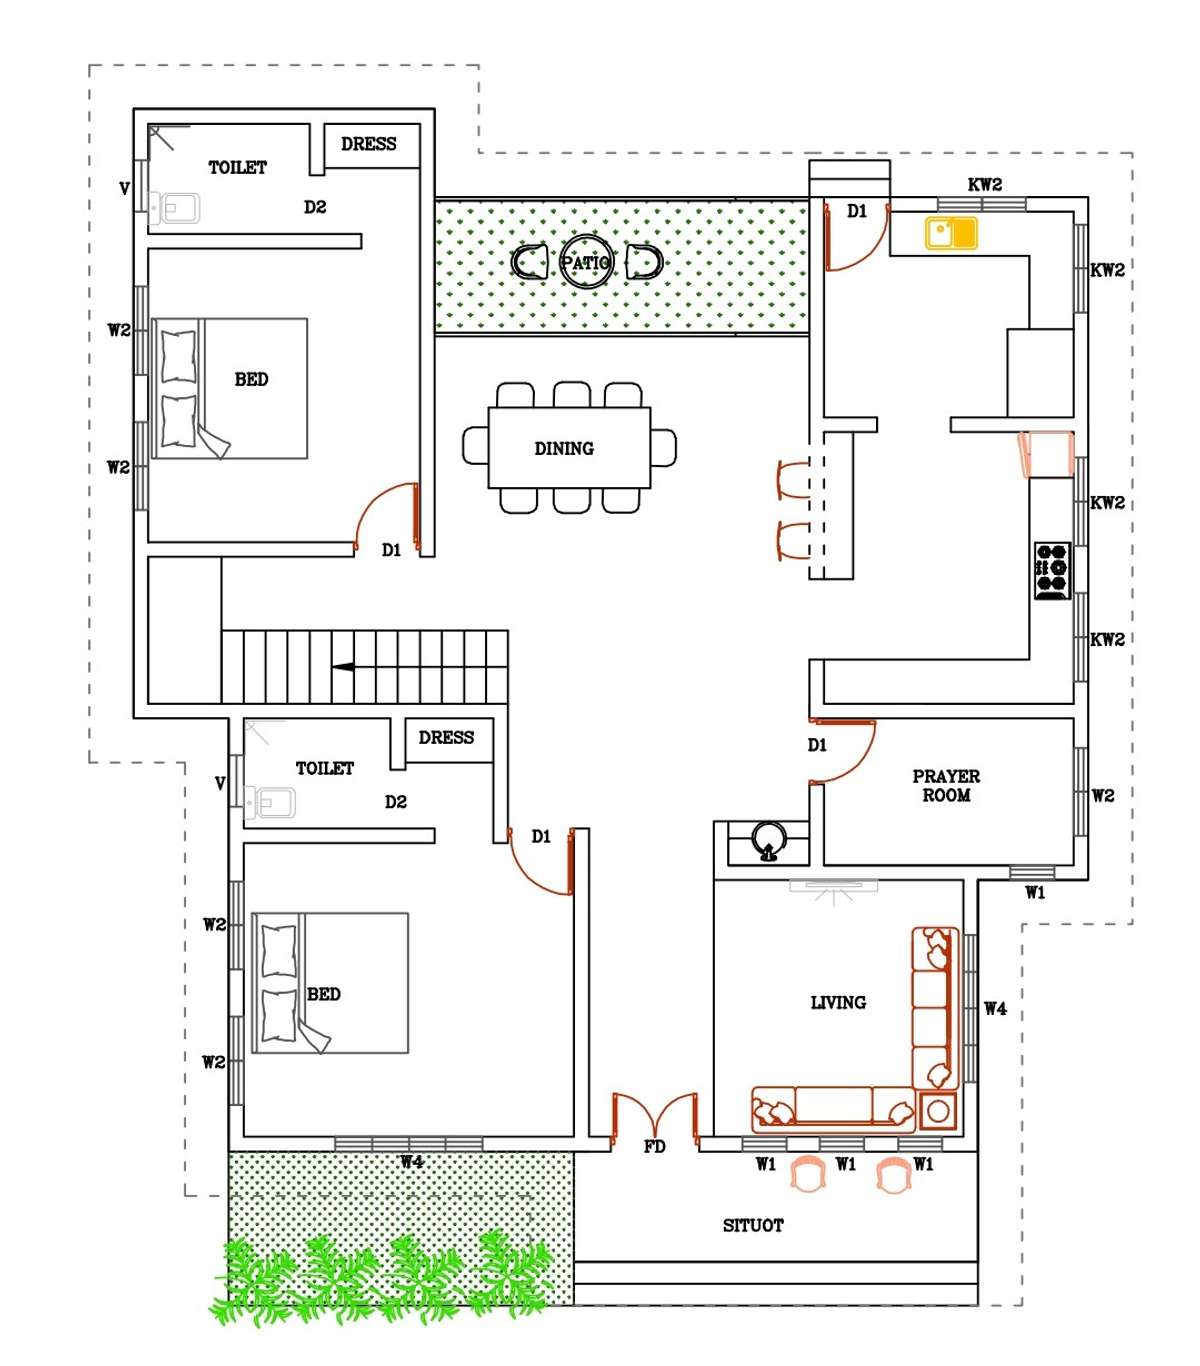 DM for more plans..
#keralahomedesignz #budget_home_simple_interior #latestgatedesign